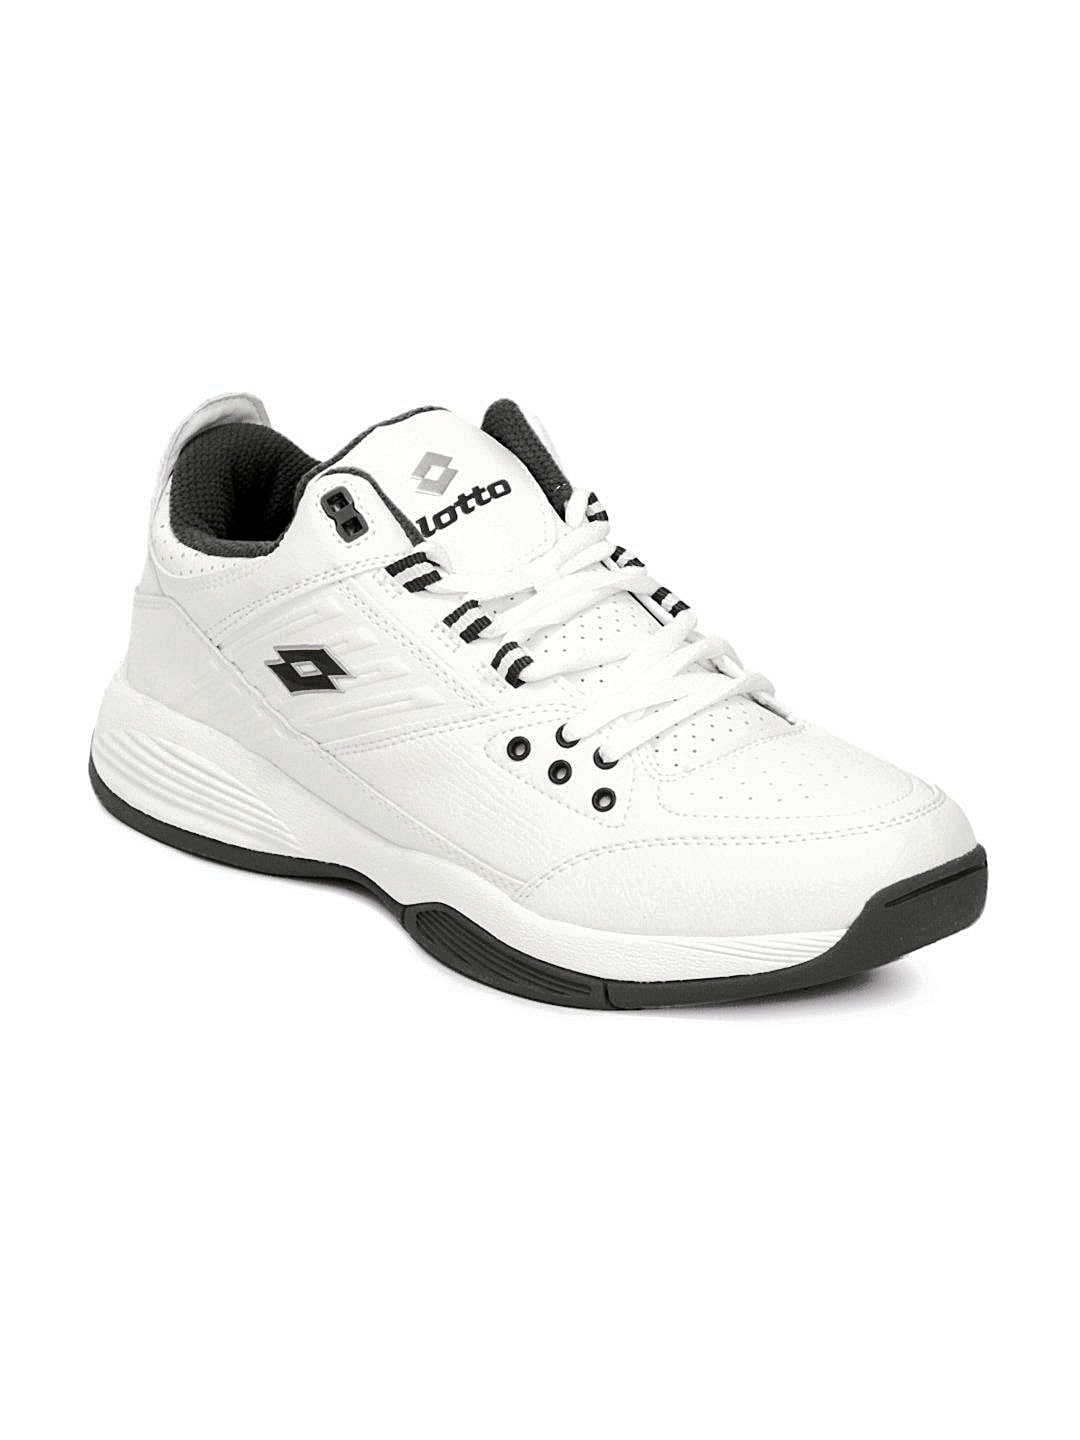 Lotto Men White Sports Shoes